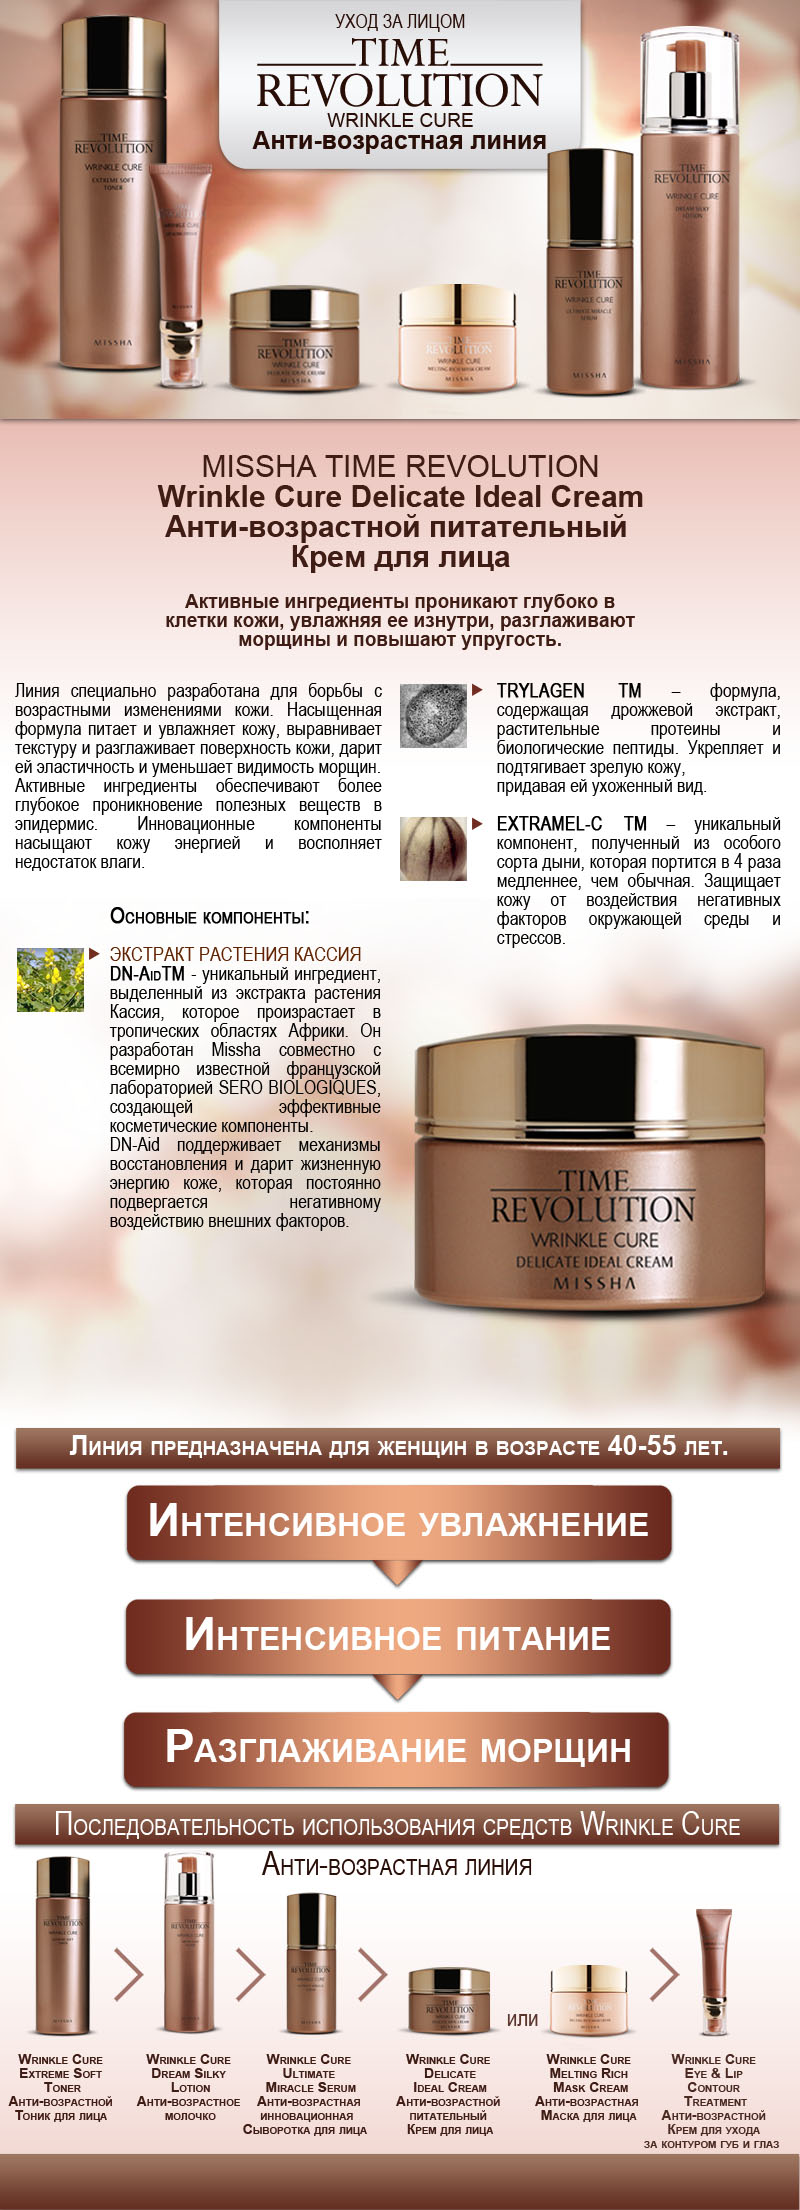 Produse cosmetice, make-up si ingrijire personala - Cosmetice Romania